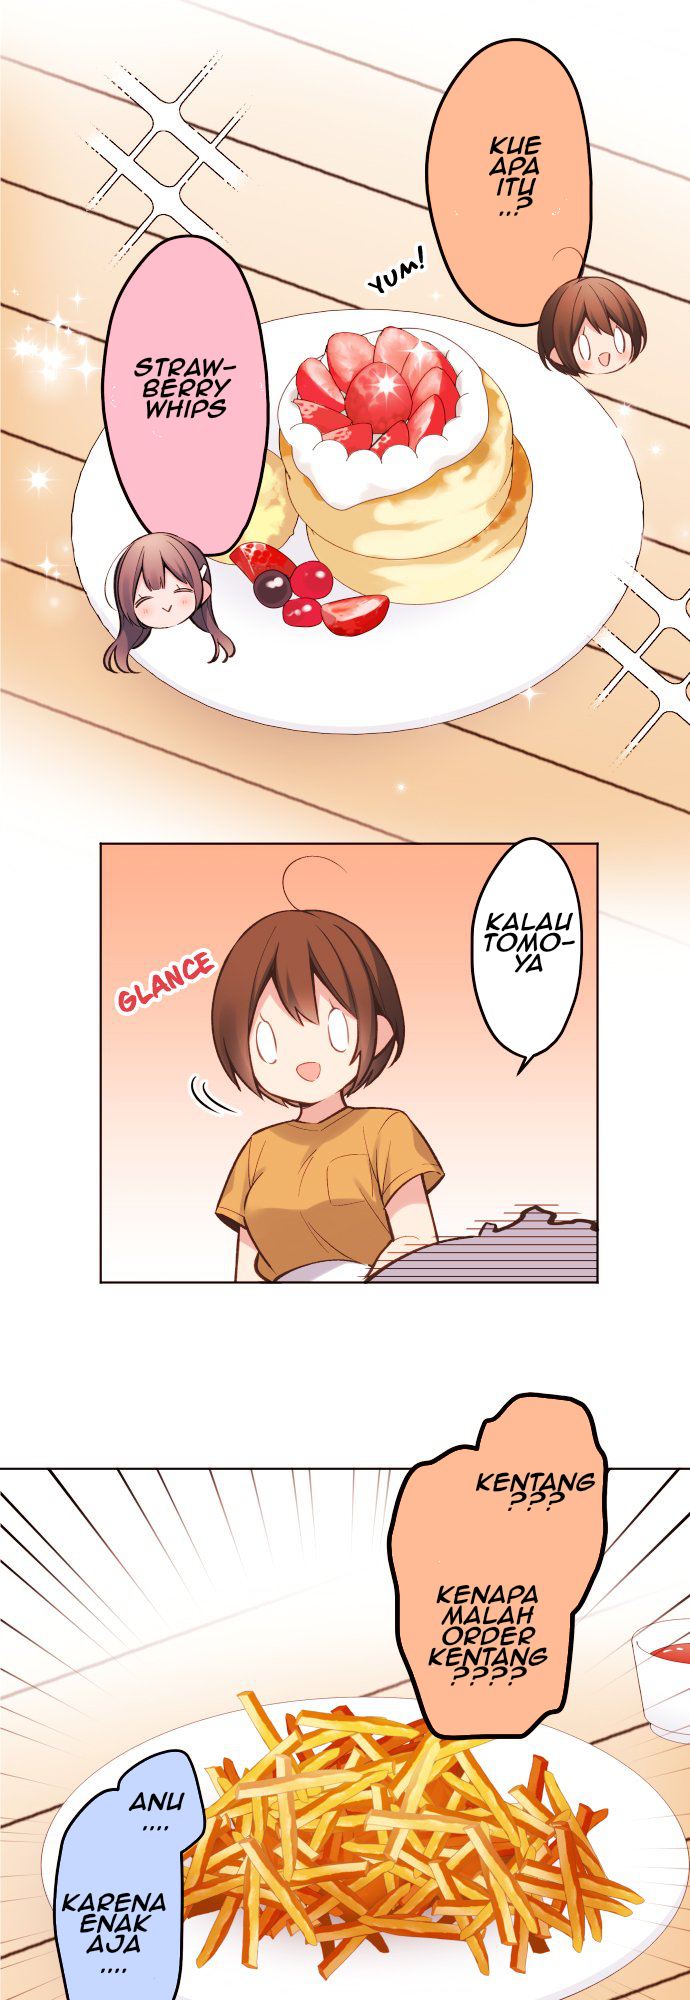 Waka-chan Is Flirty Again Chapter 26